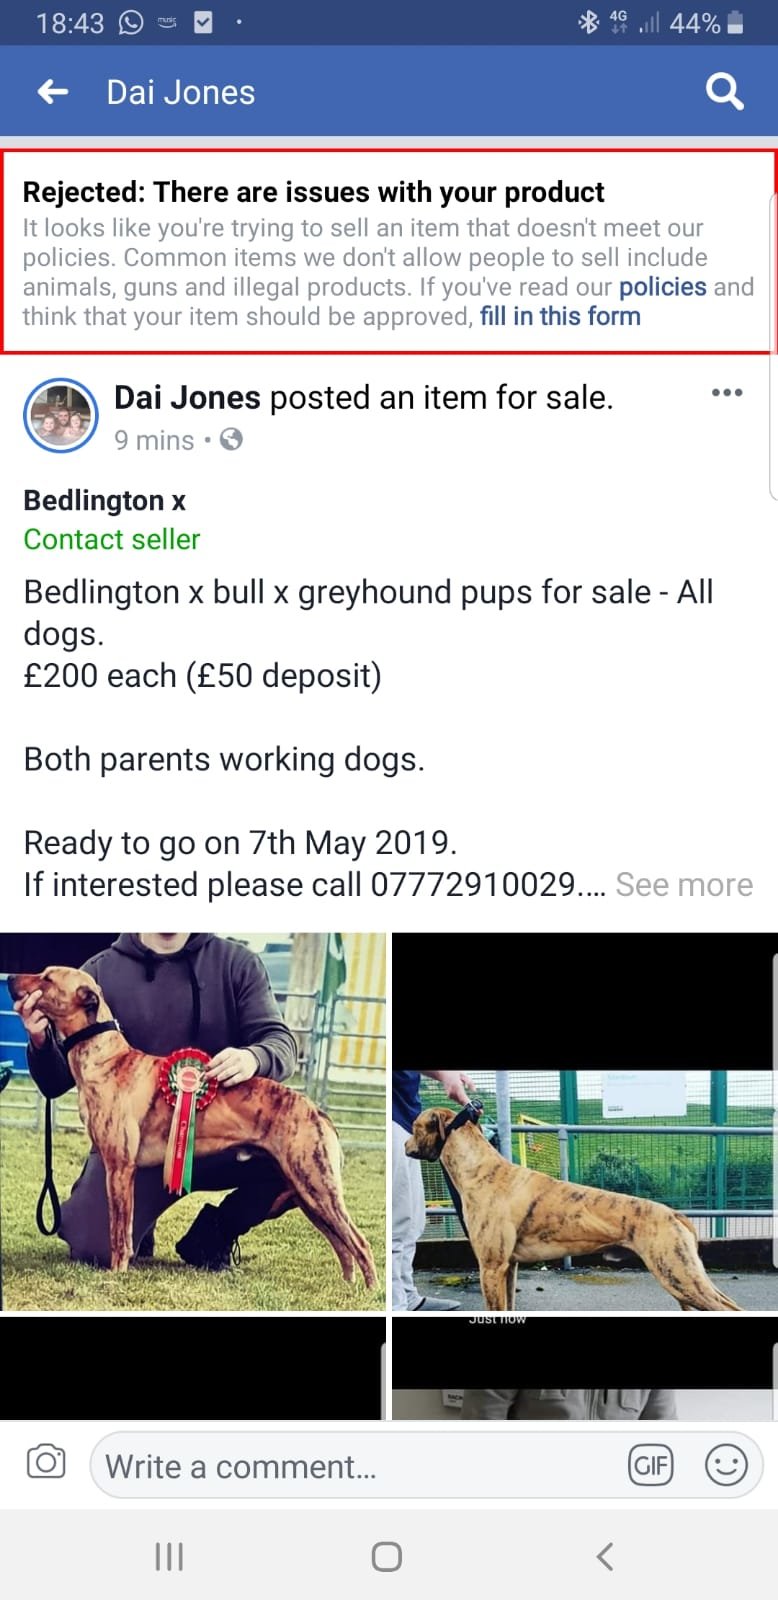 Bedlington x bull x greyhound pups